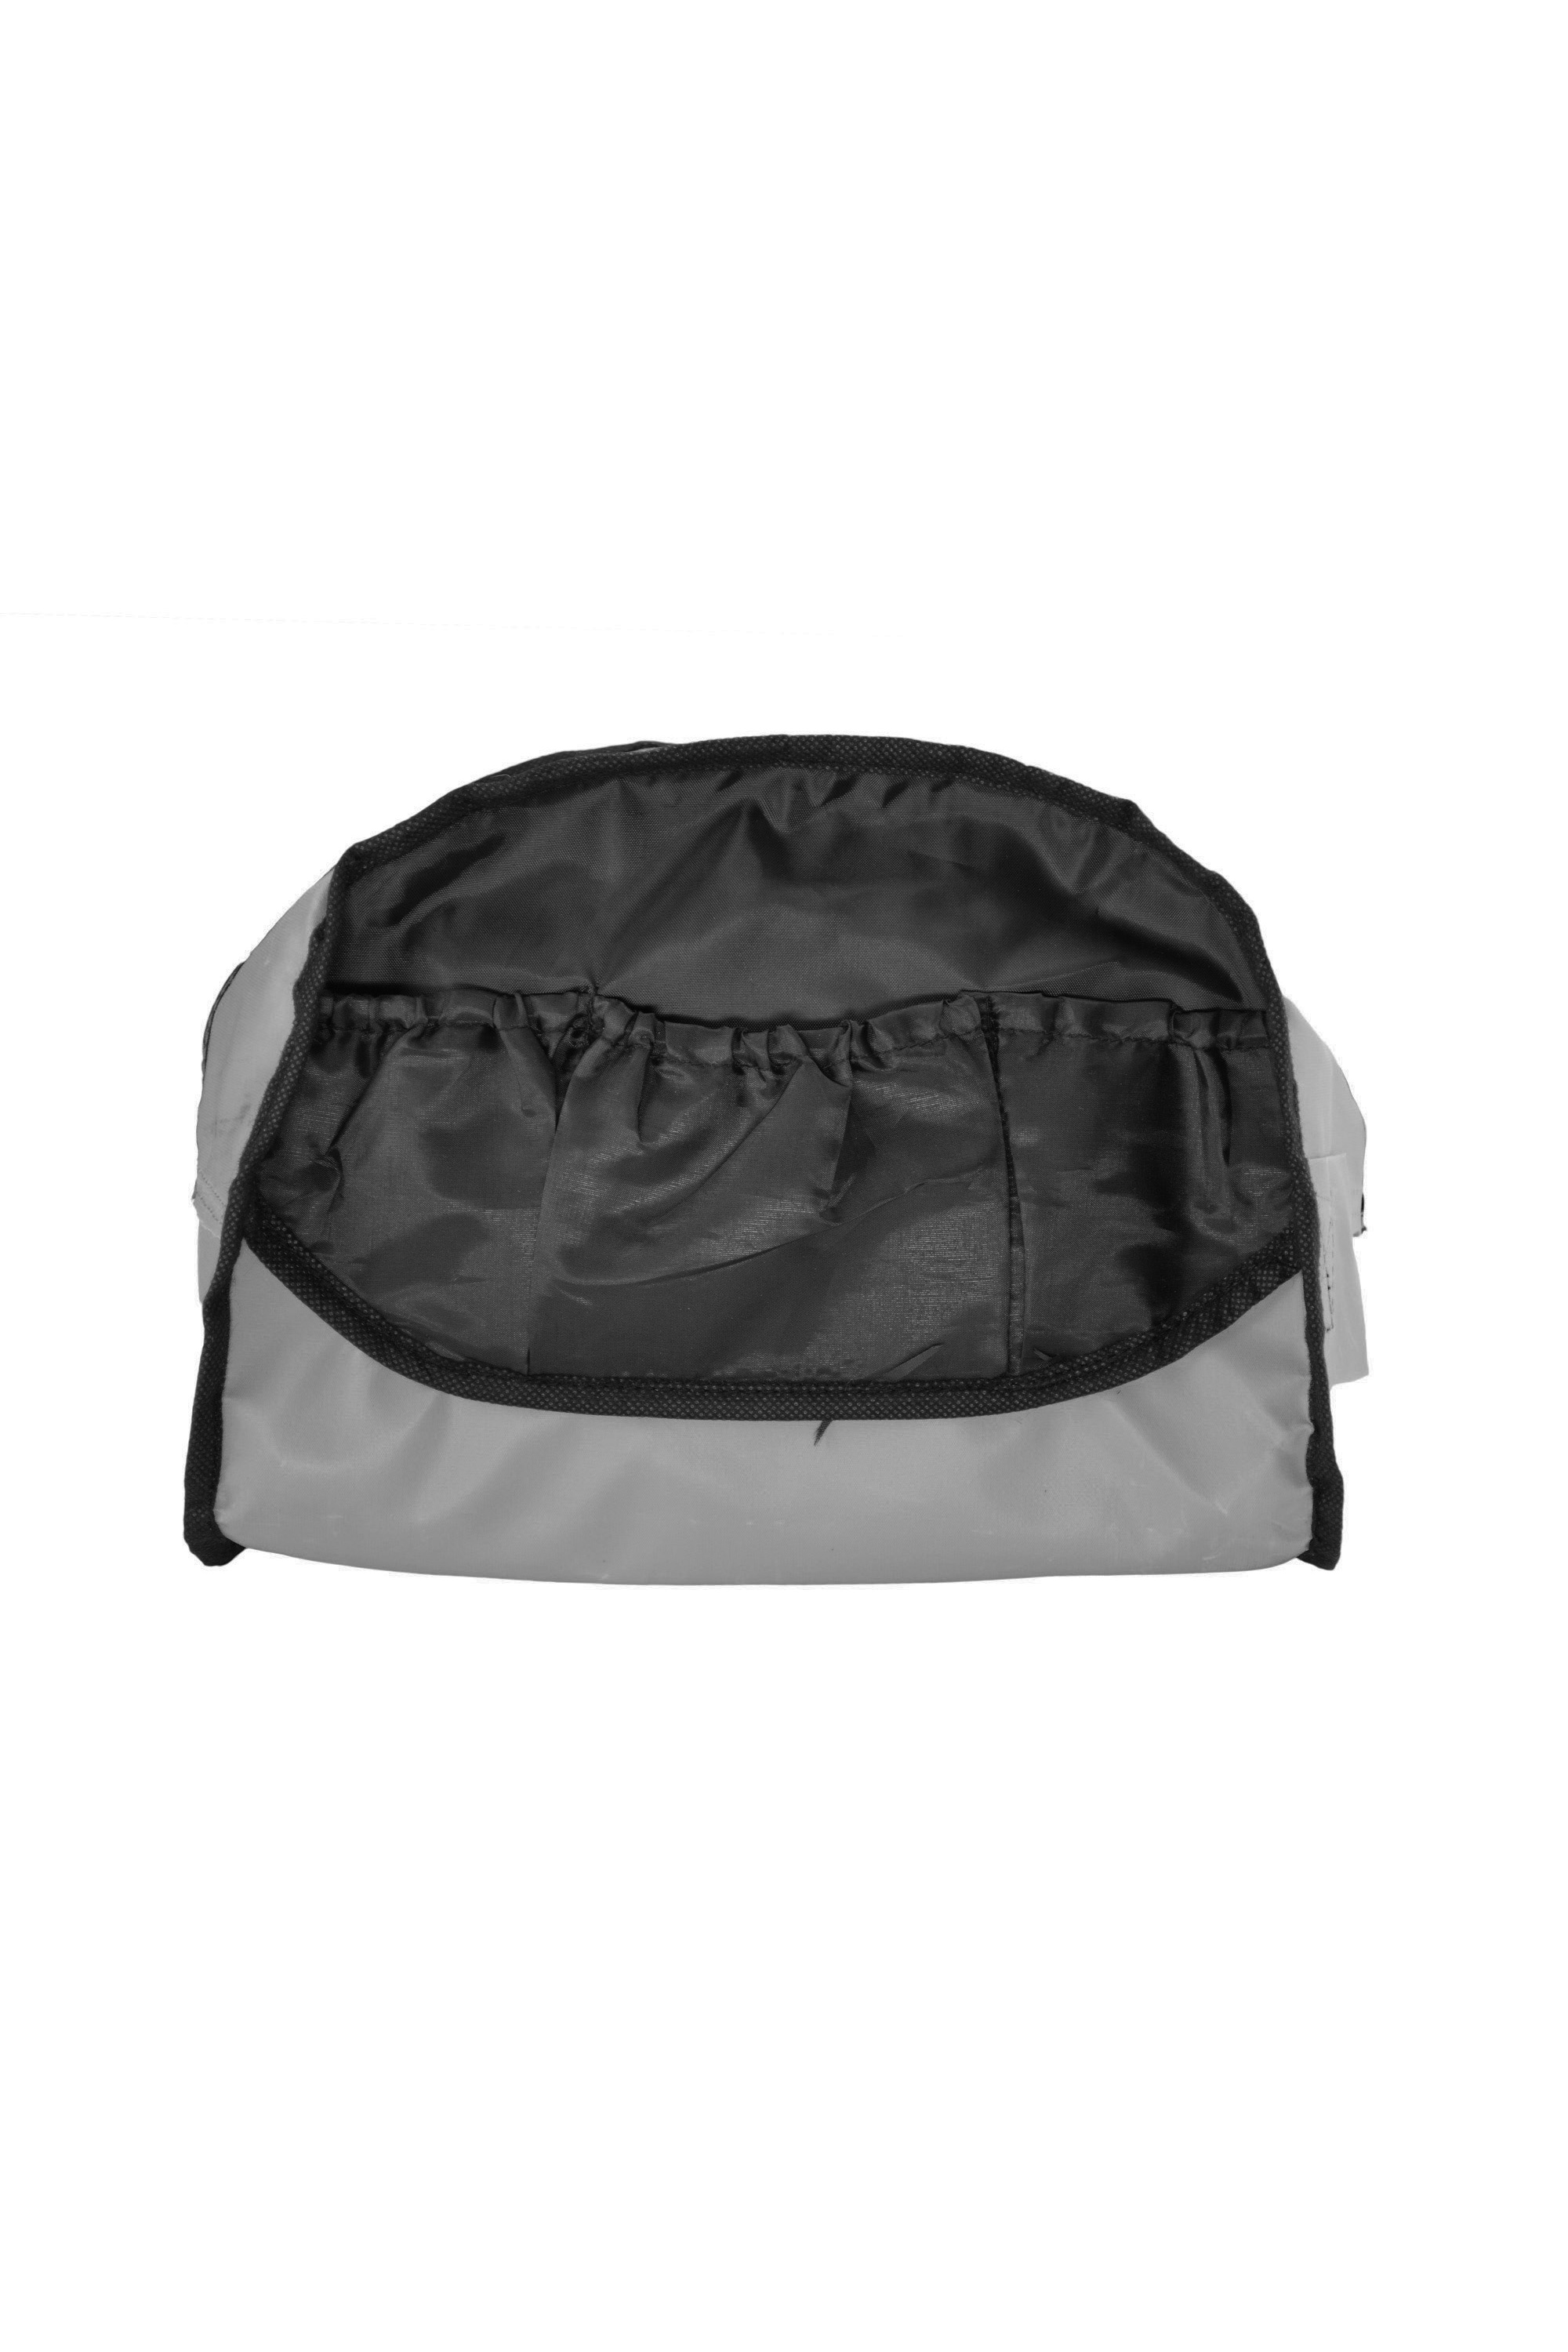 DALIX 12" Mini Duffel Bag Gym Duffle in Gray - image 3 of 8